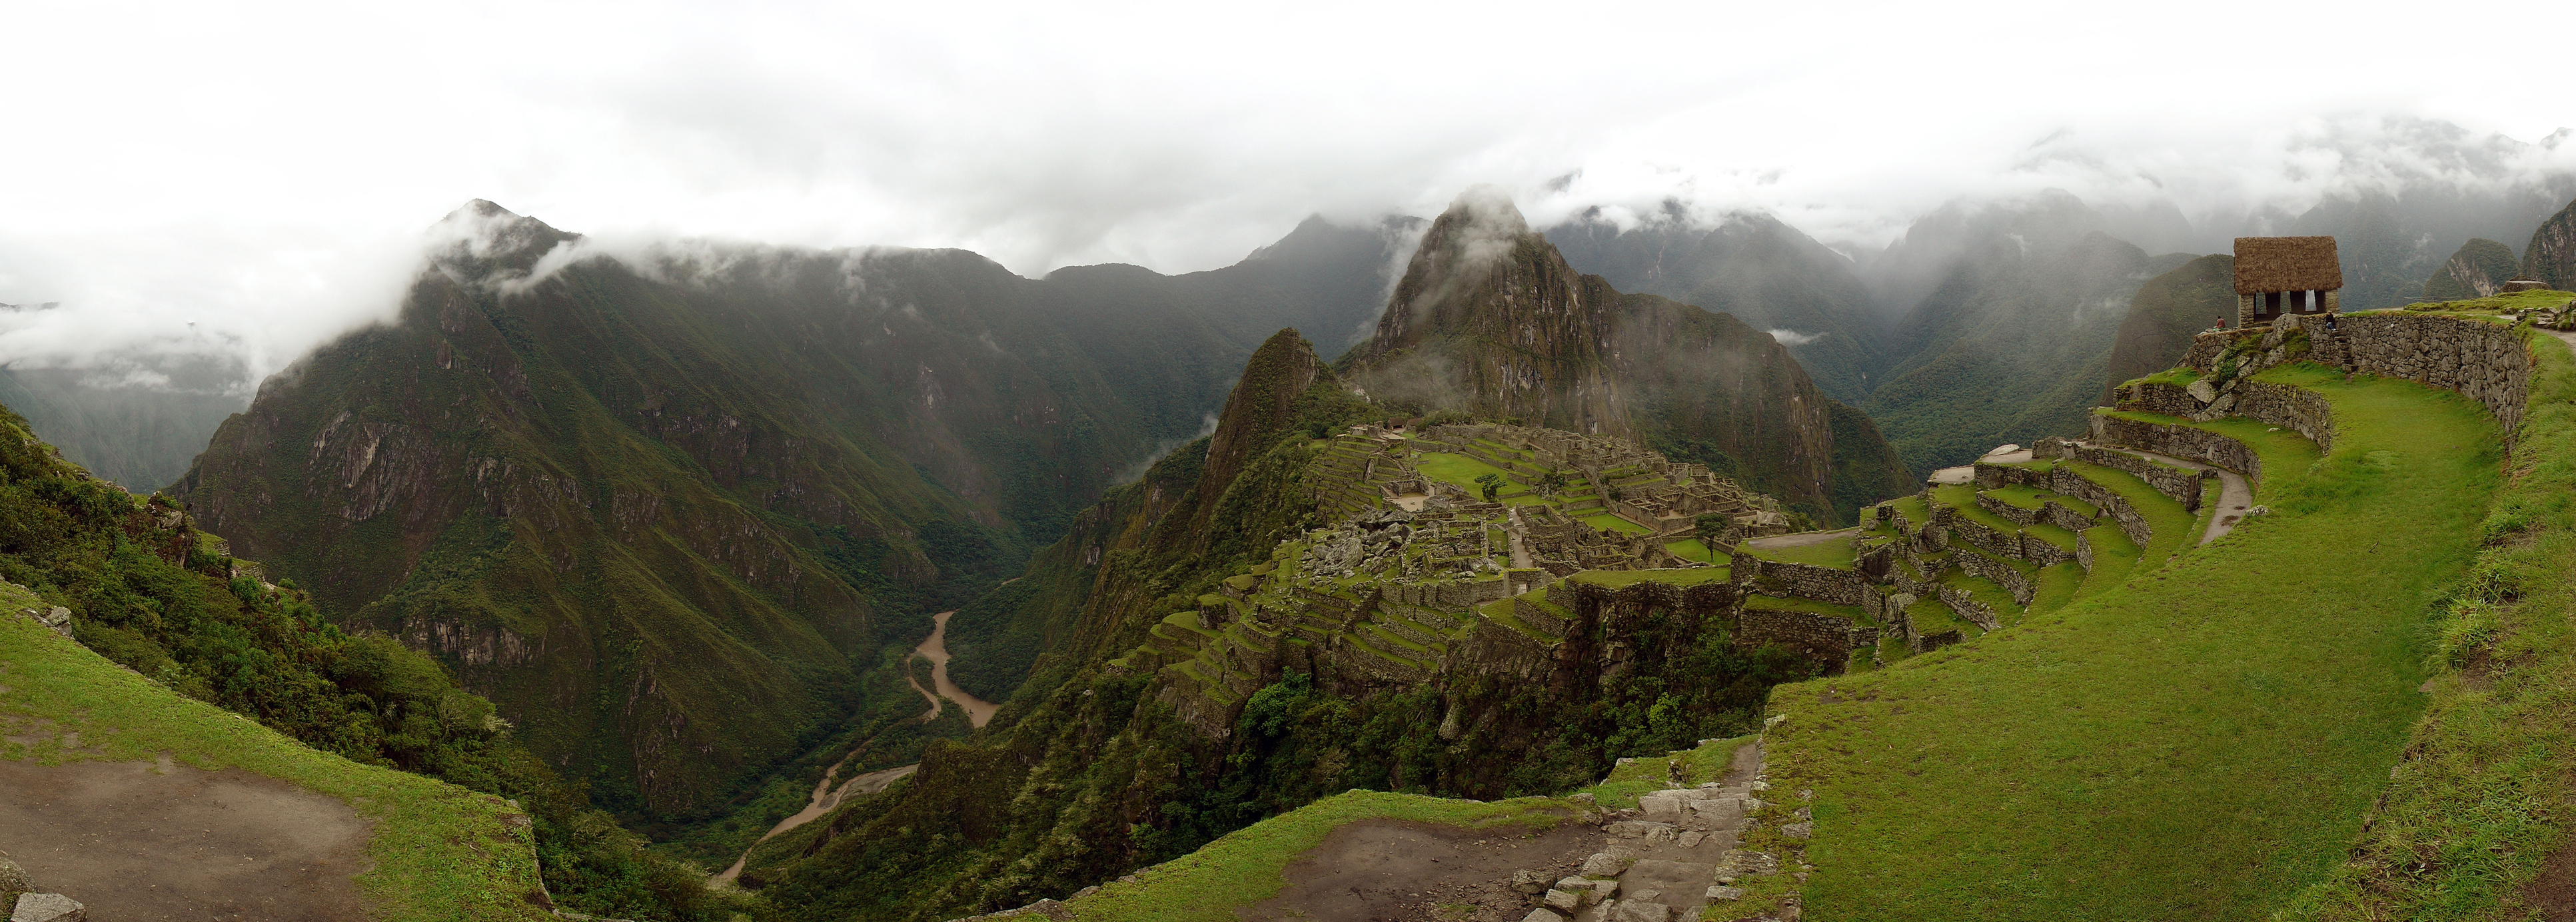 Panorama du Macchu Picchu et des environs 2.jpg